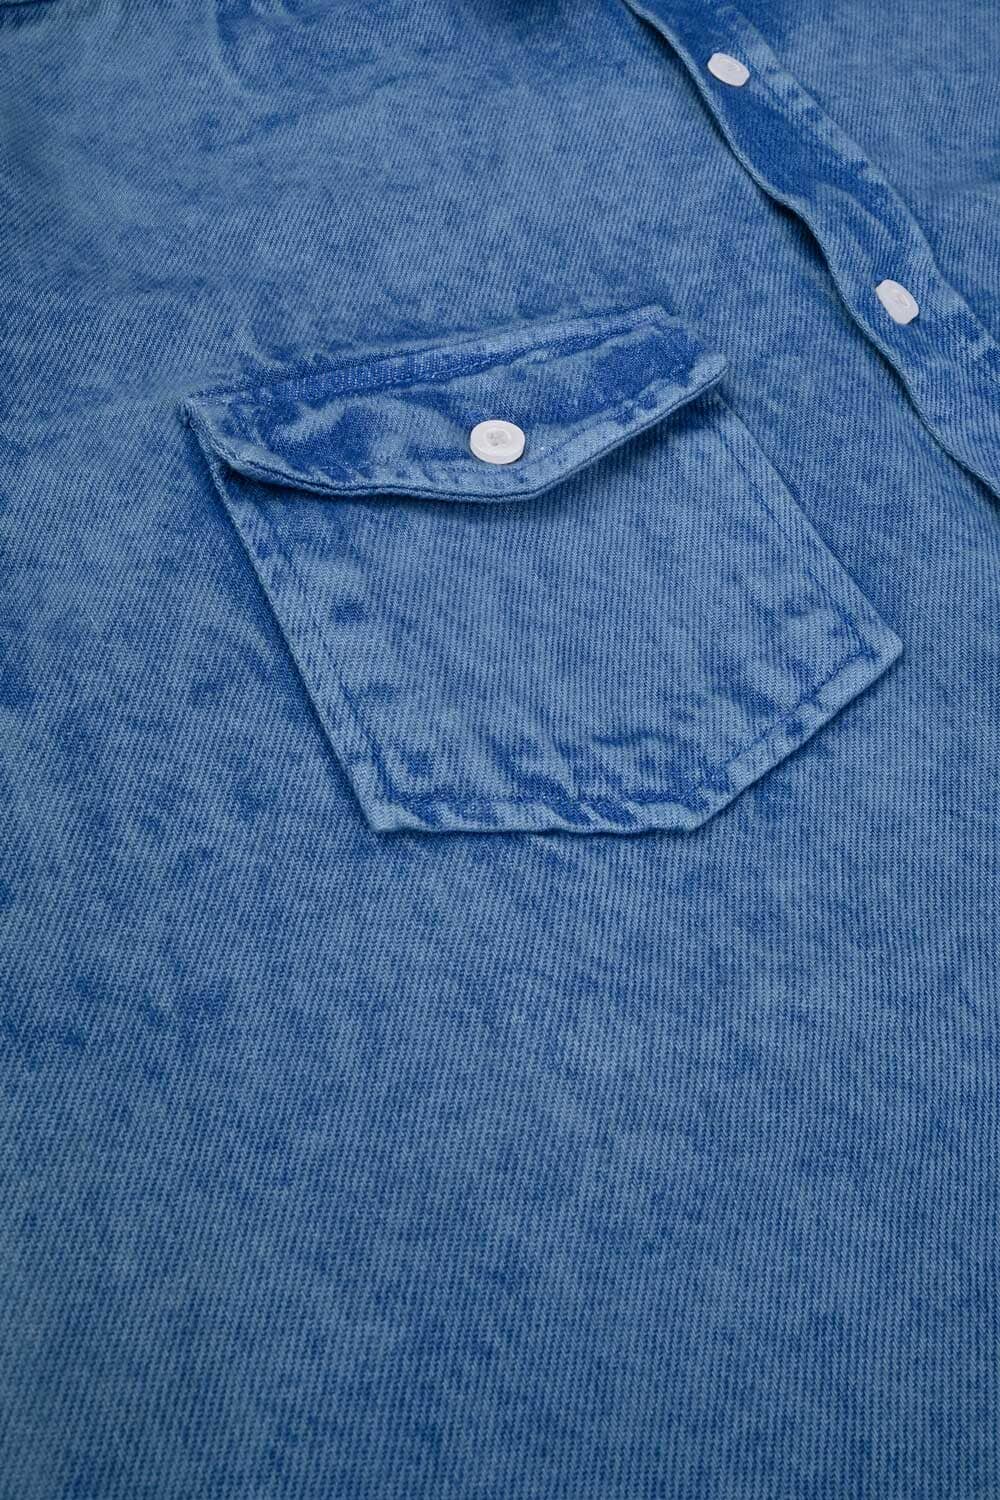 Plain Men Regular Fit Blue Denim Shirt at Rs 350 in New Delhi | ID:  2851882649597